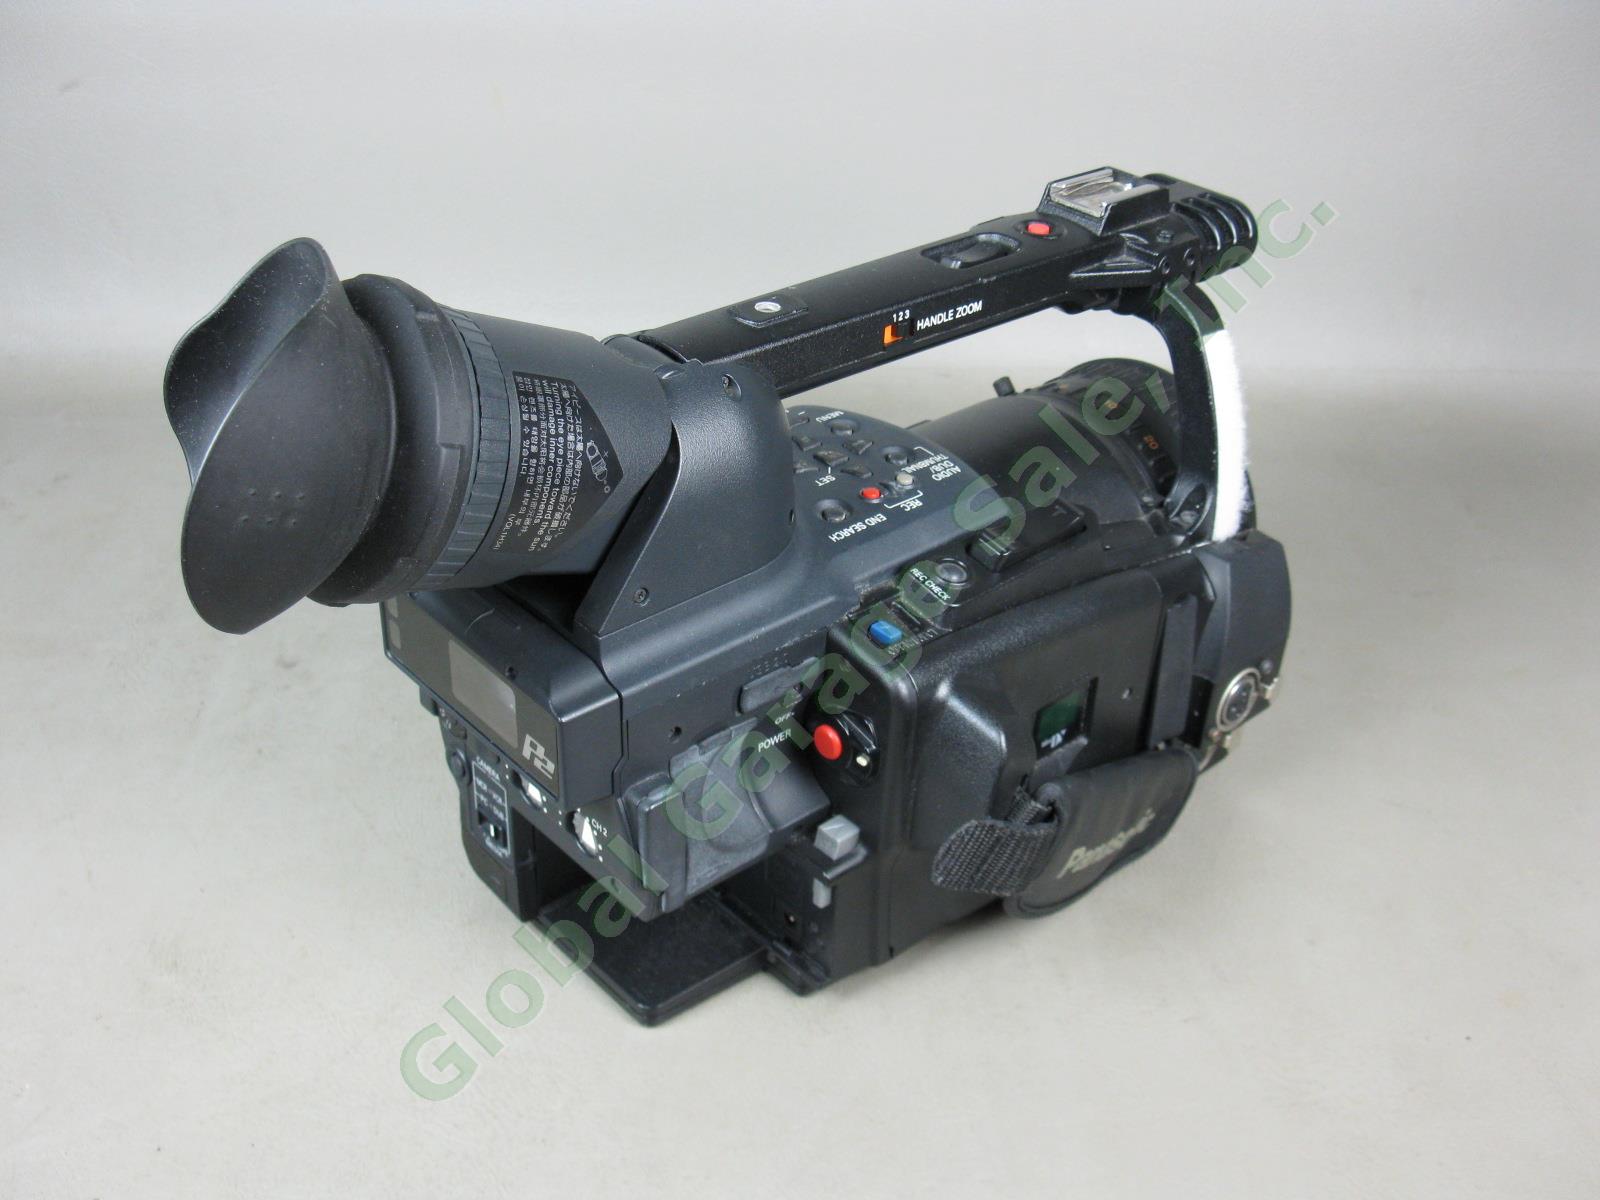 Panasonic AG-HVX200P DVCPRO 3CCD HD P2 MiniDV Pro Camcorder Video Camera Bundle 6